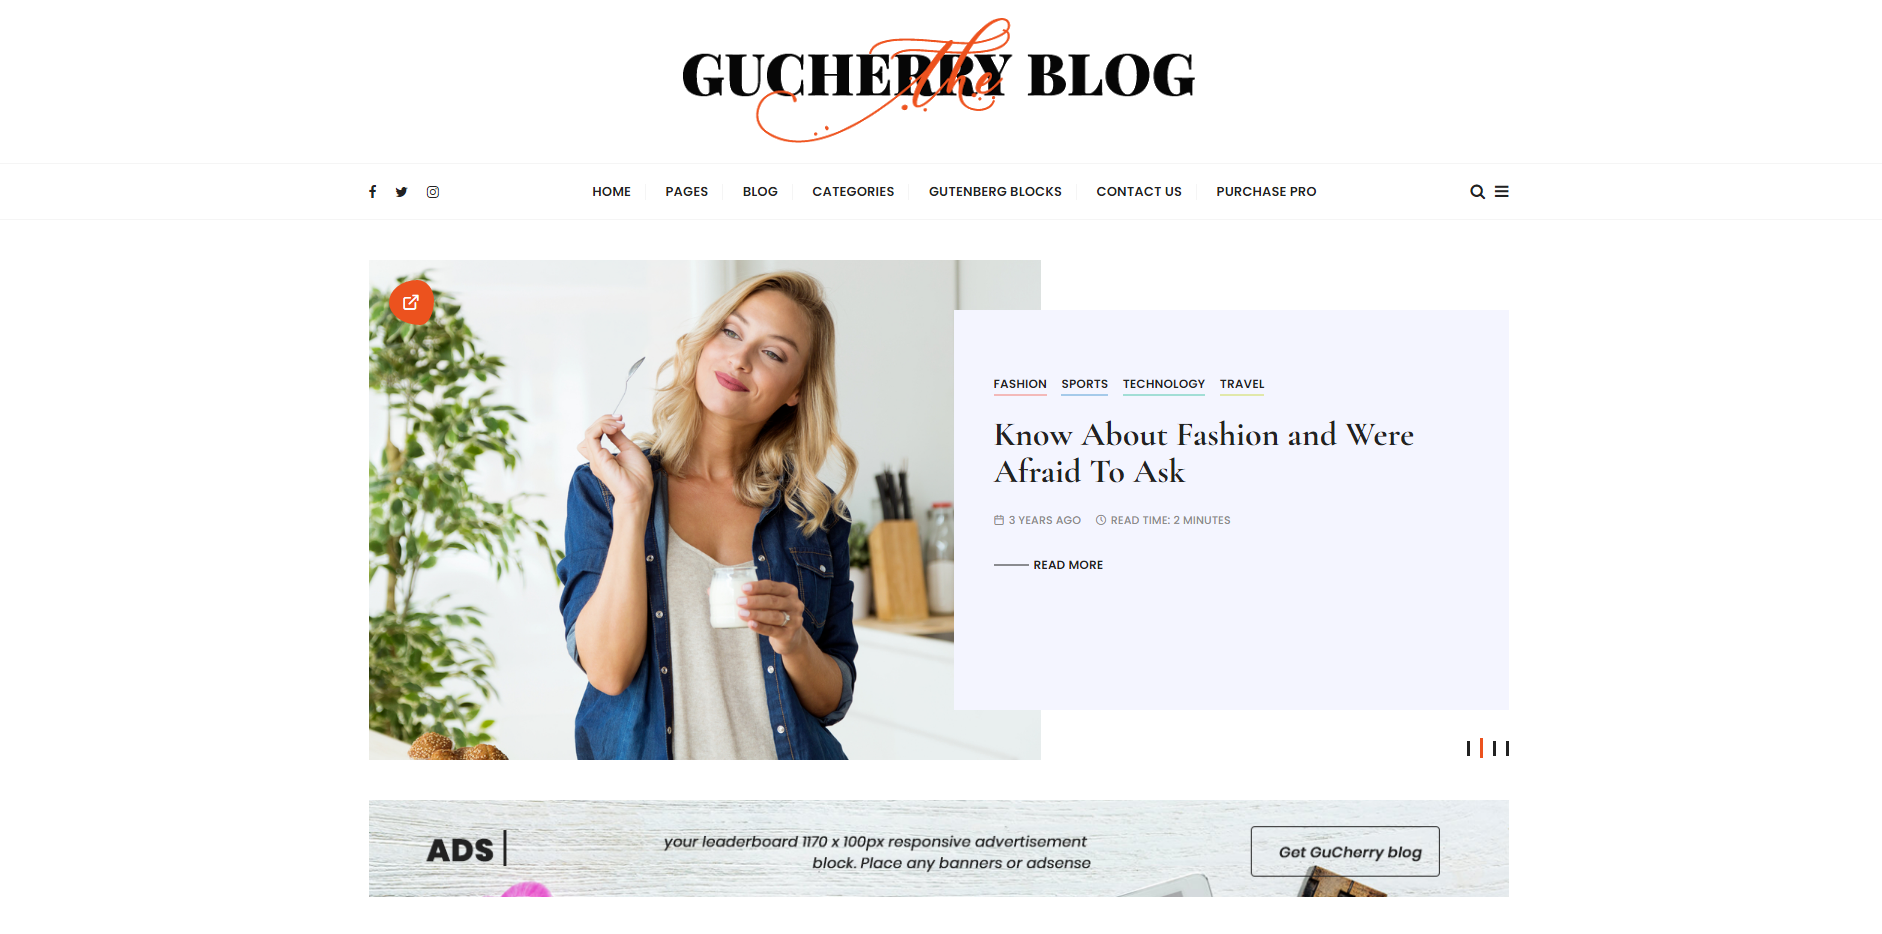 Gucherry Blog - free WordPress blog themes